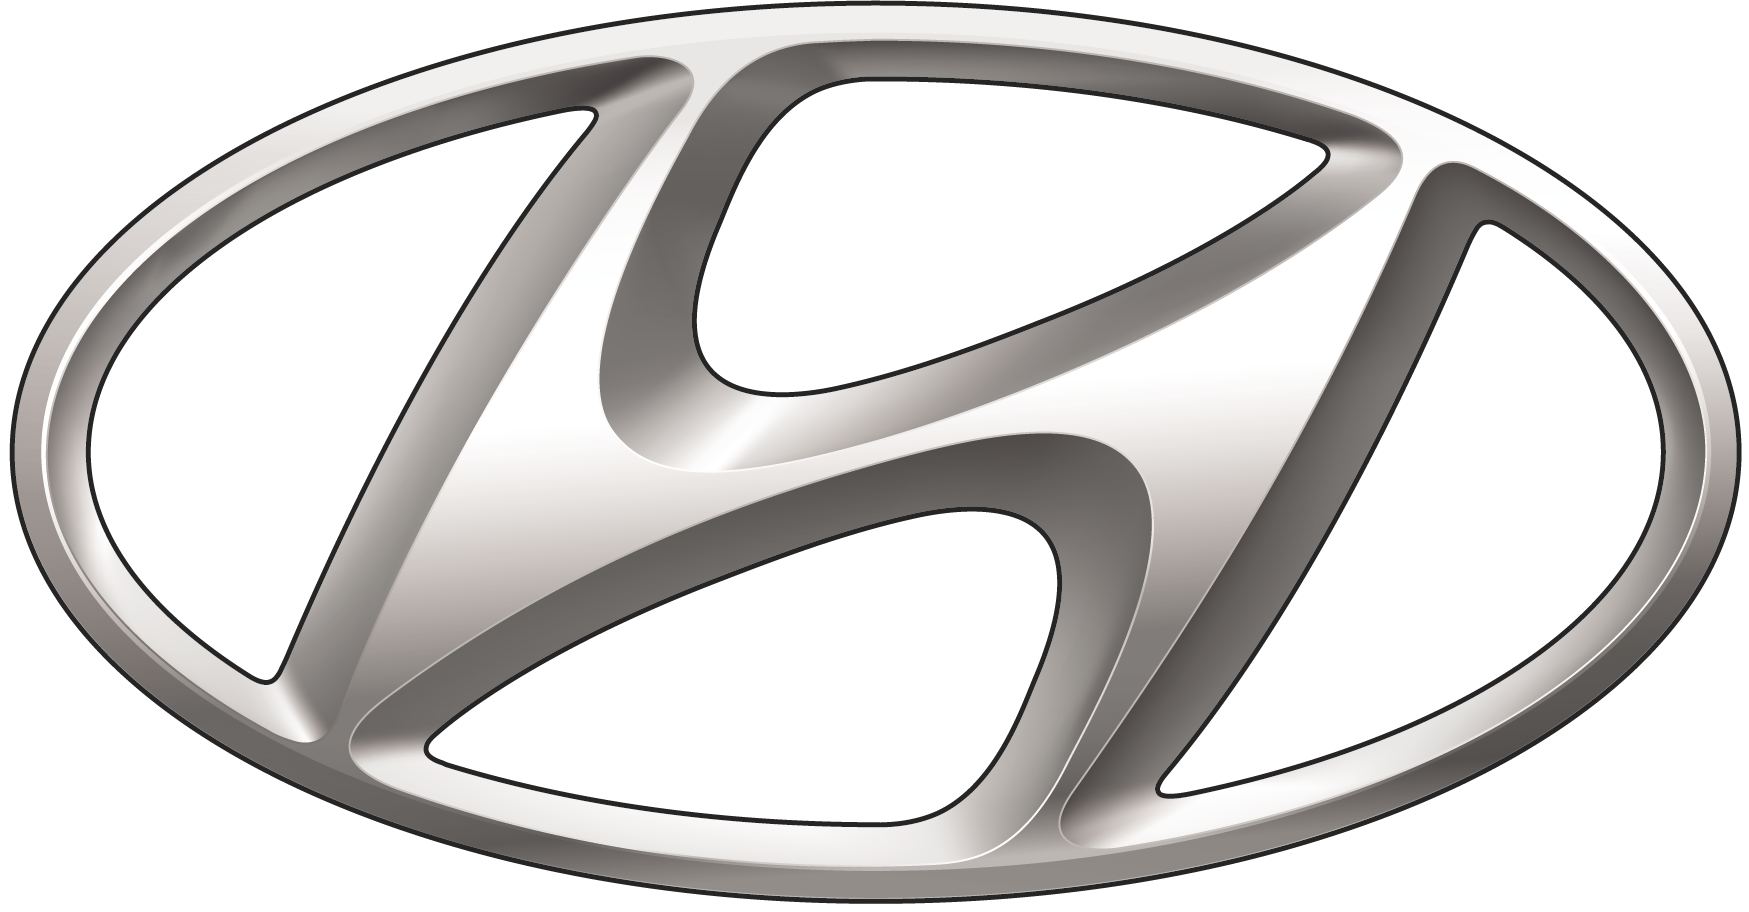 Hyundai car logo PNG brand image